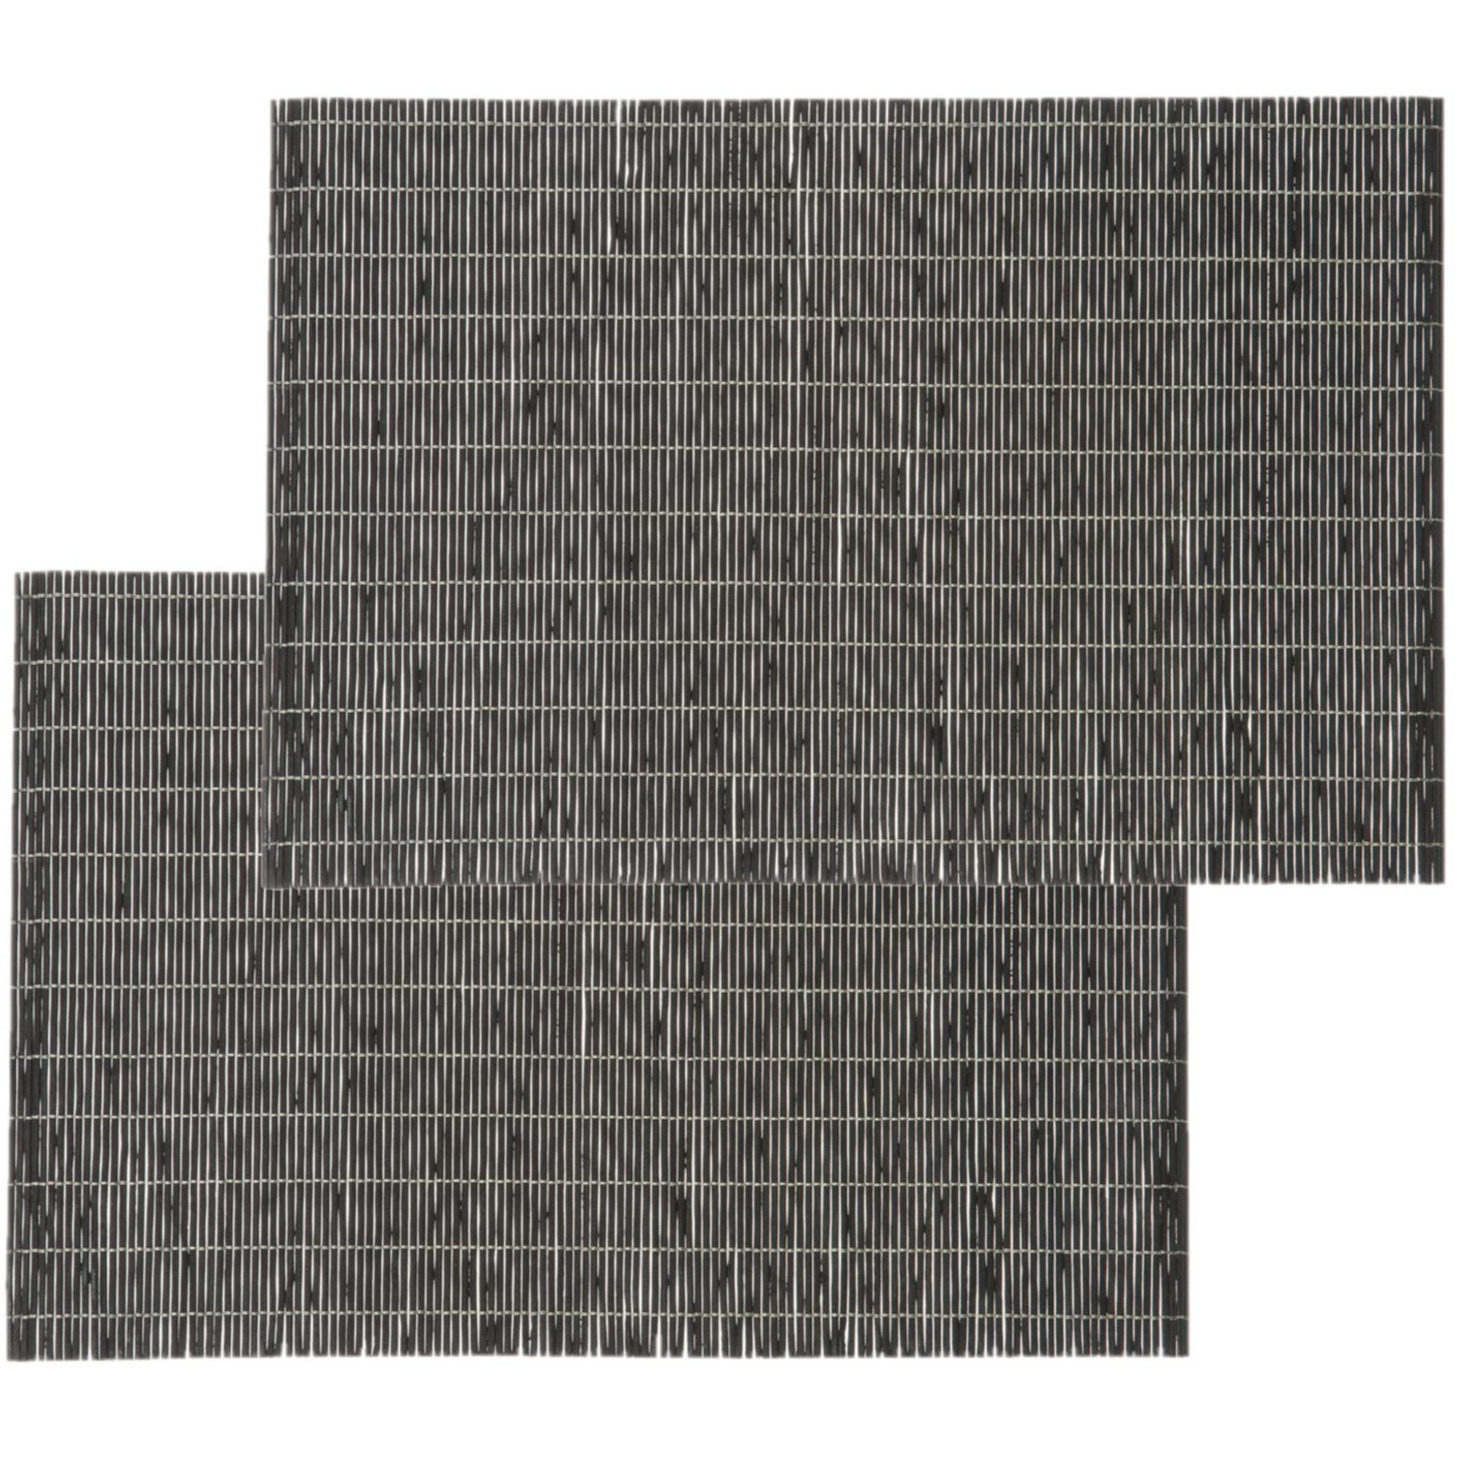 Set van 6x stuks placemats zwart bamboe 45 x 30 cm